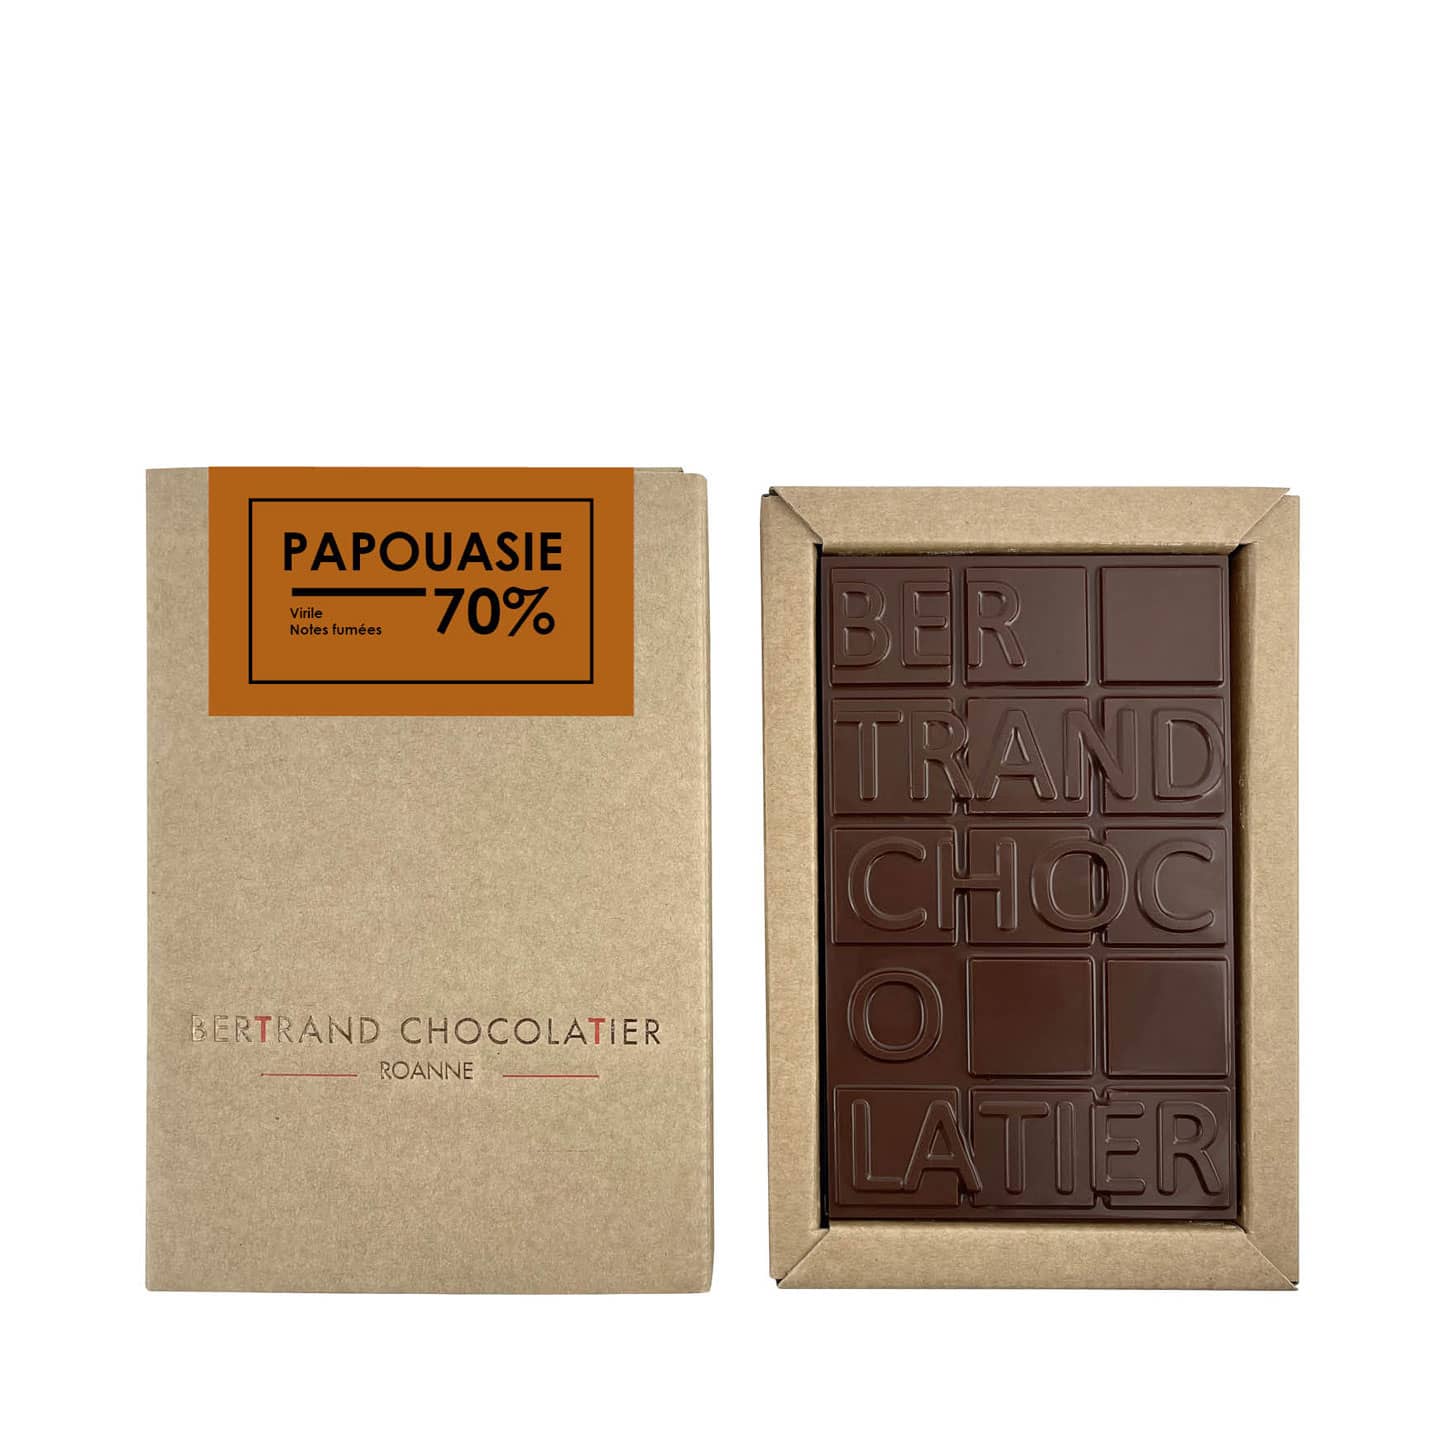 Tablette chocolat Noir 70% Grand Cru origine Papouasie 90g